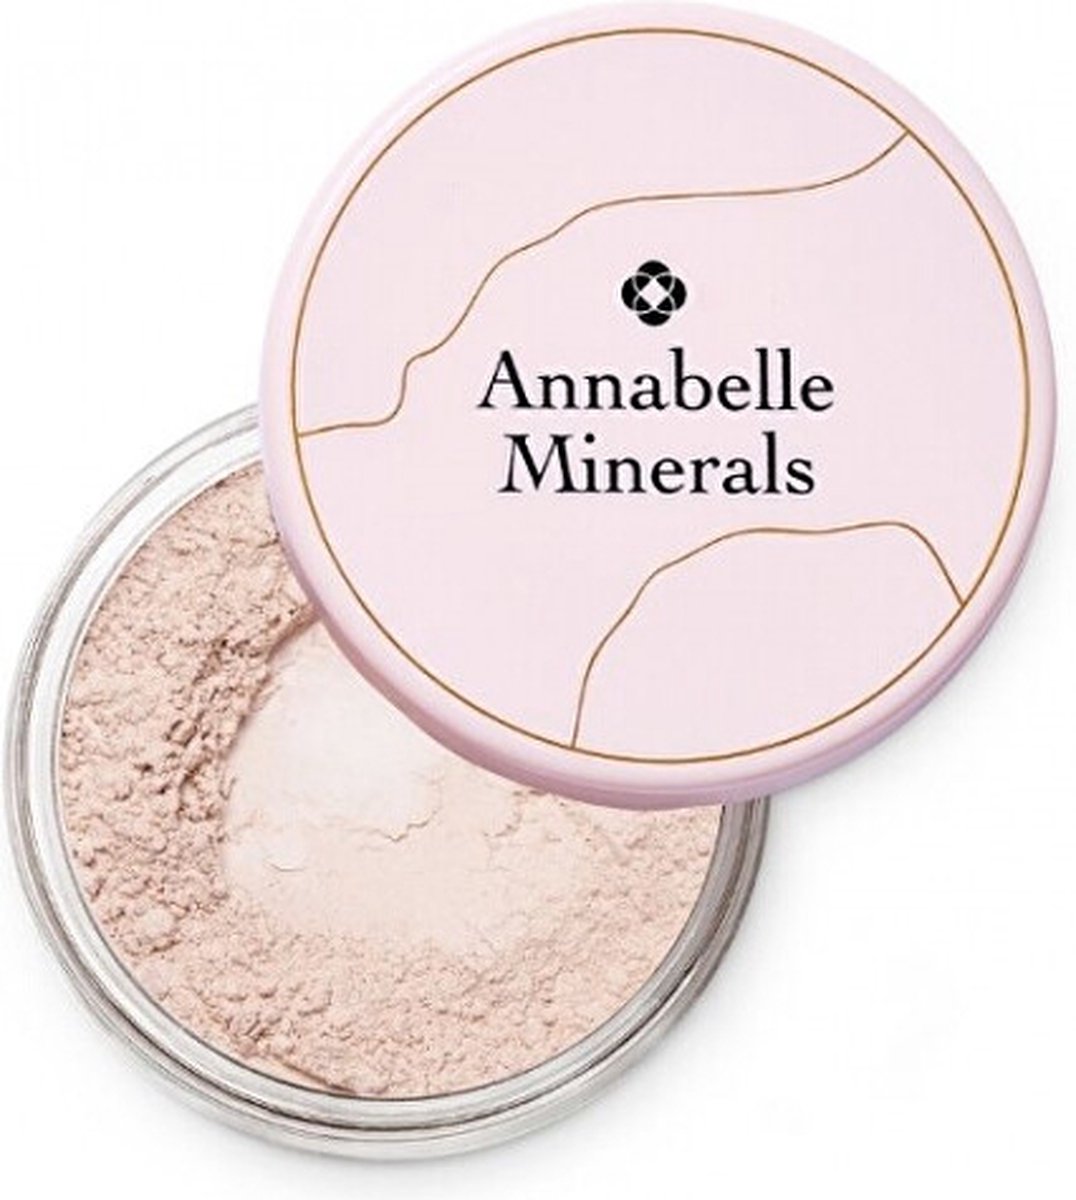 Annabelle Minerals - Primer Pretty Neutral puder glinkowy 4g